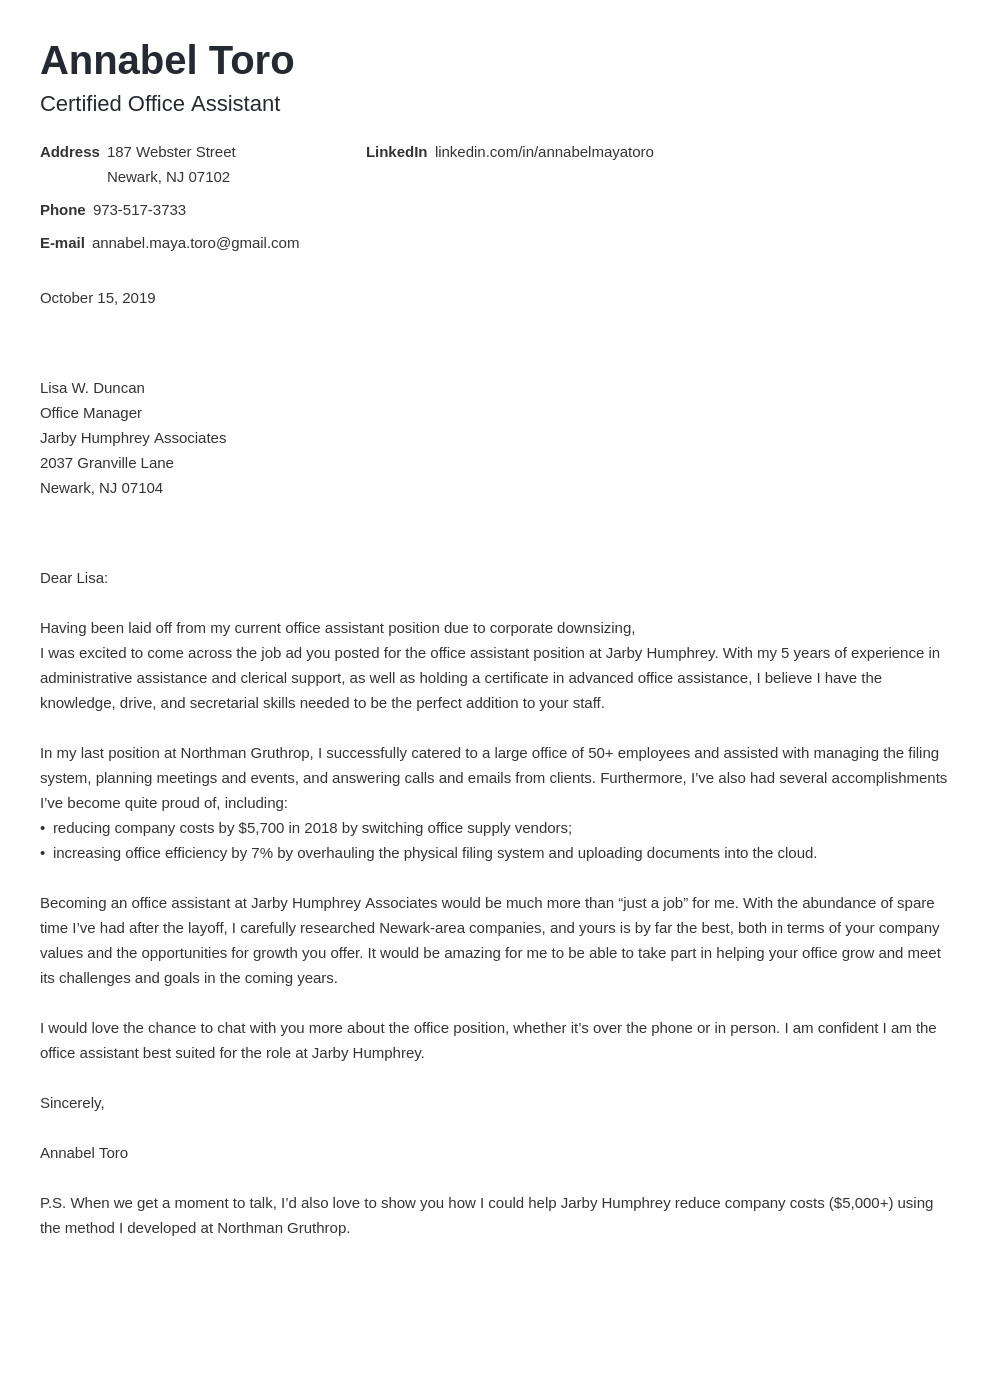 cover letter example for applying for multiple jobs